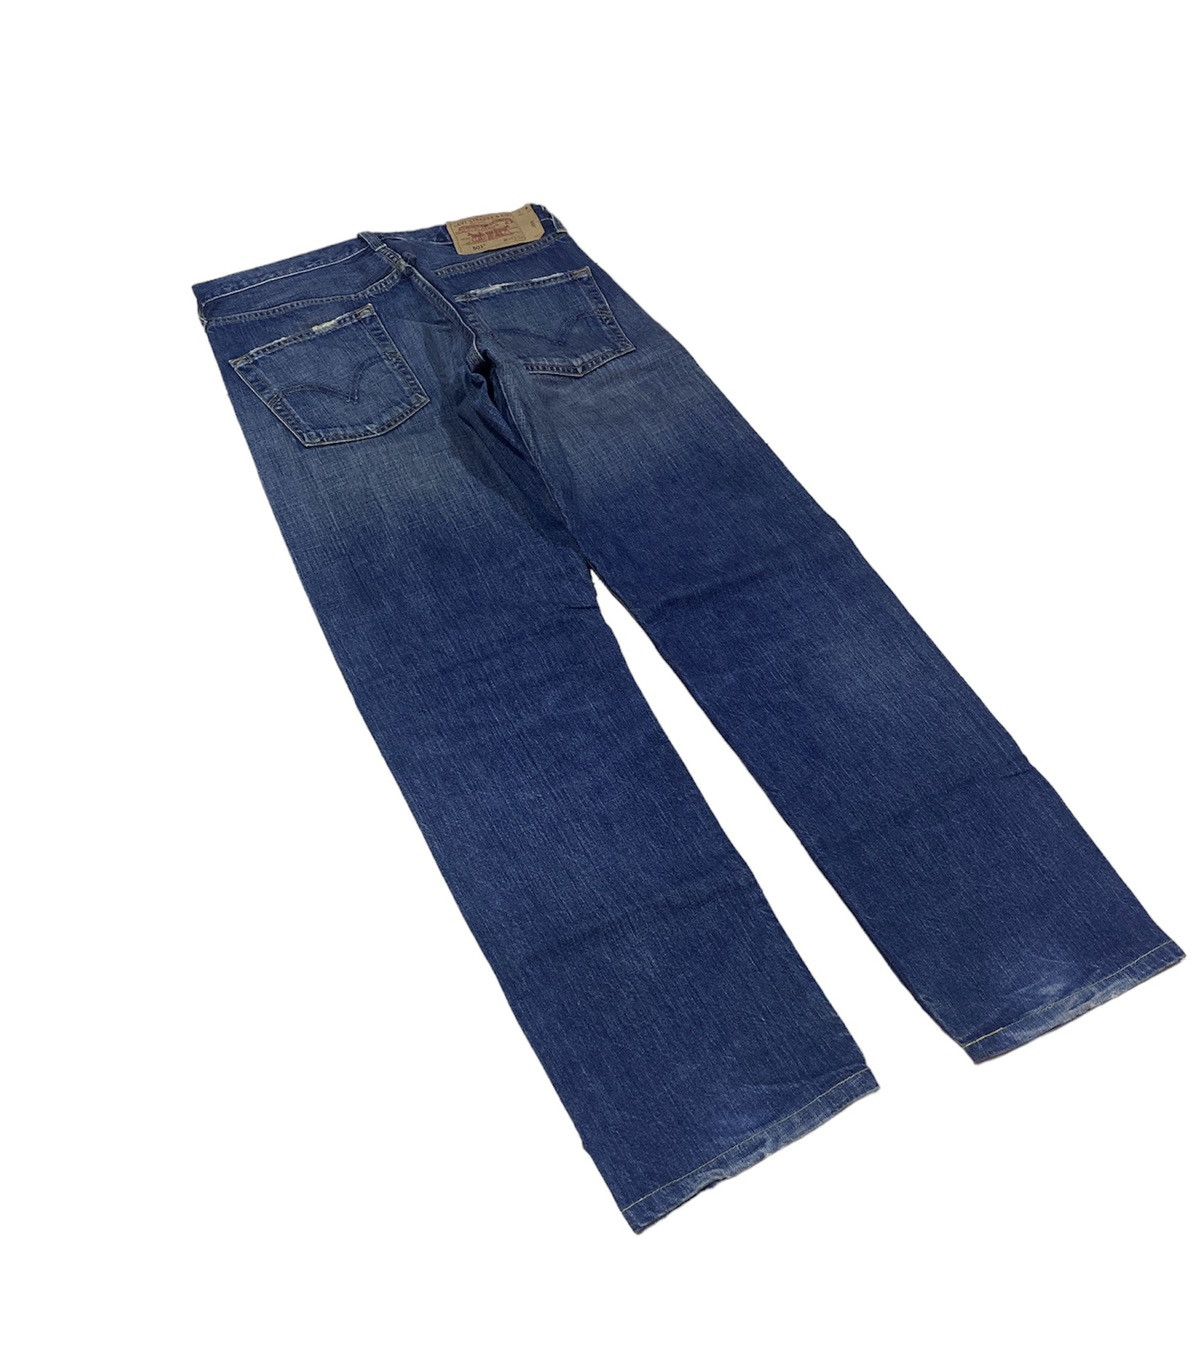 Levi’s San Francisco 501 Denim Jeans - 2